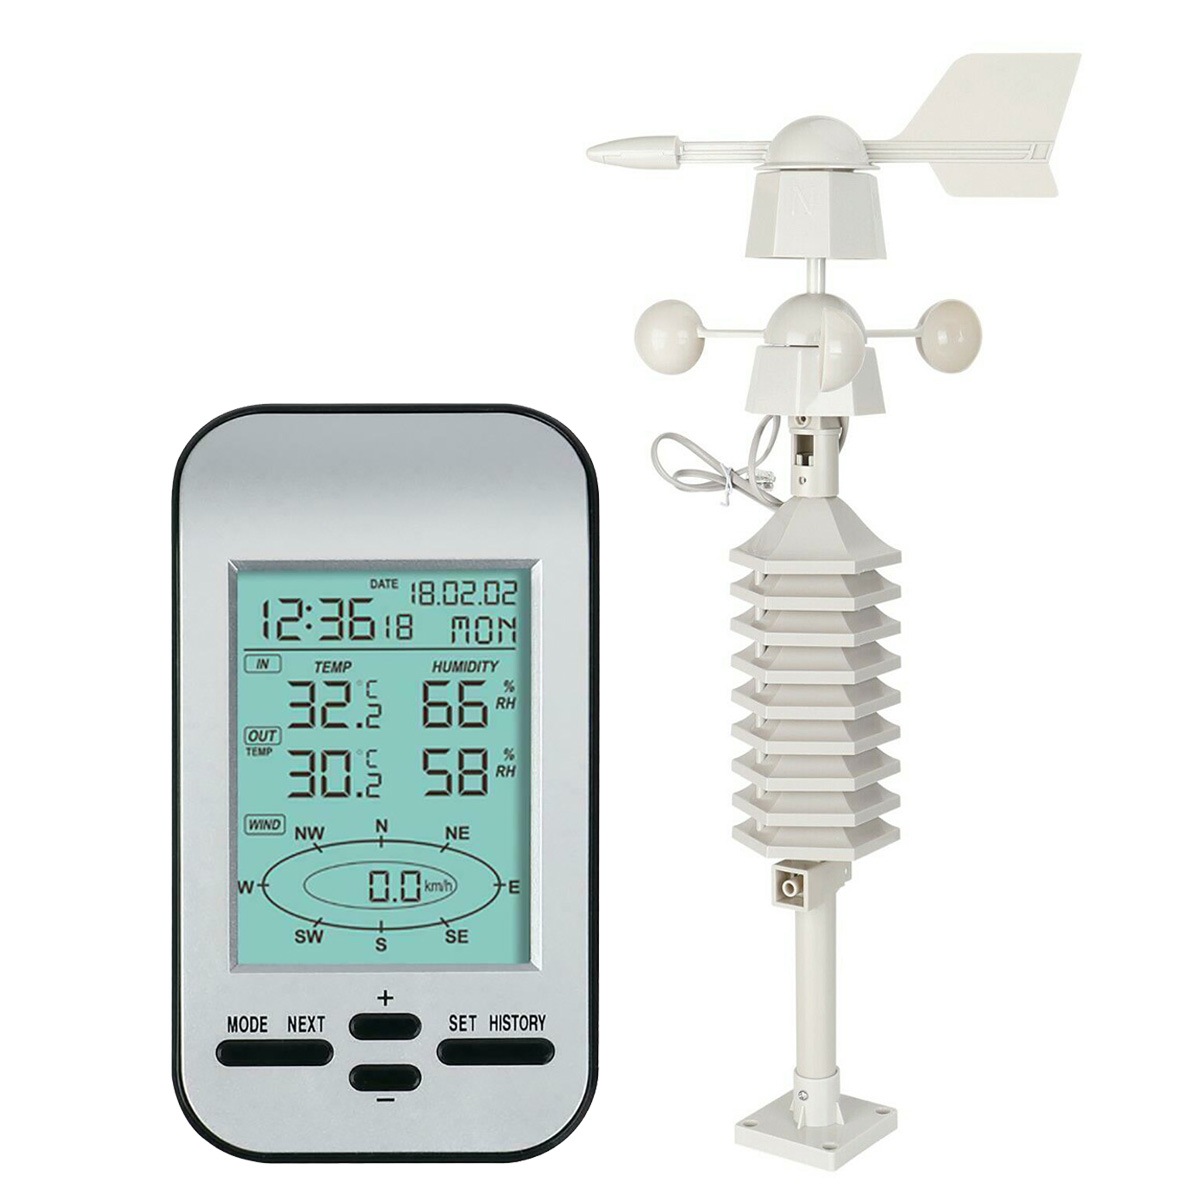 

RF 433mhz Wireless Weather Station Clock Wind Speed Direction Sensor Temperature